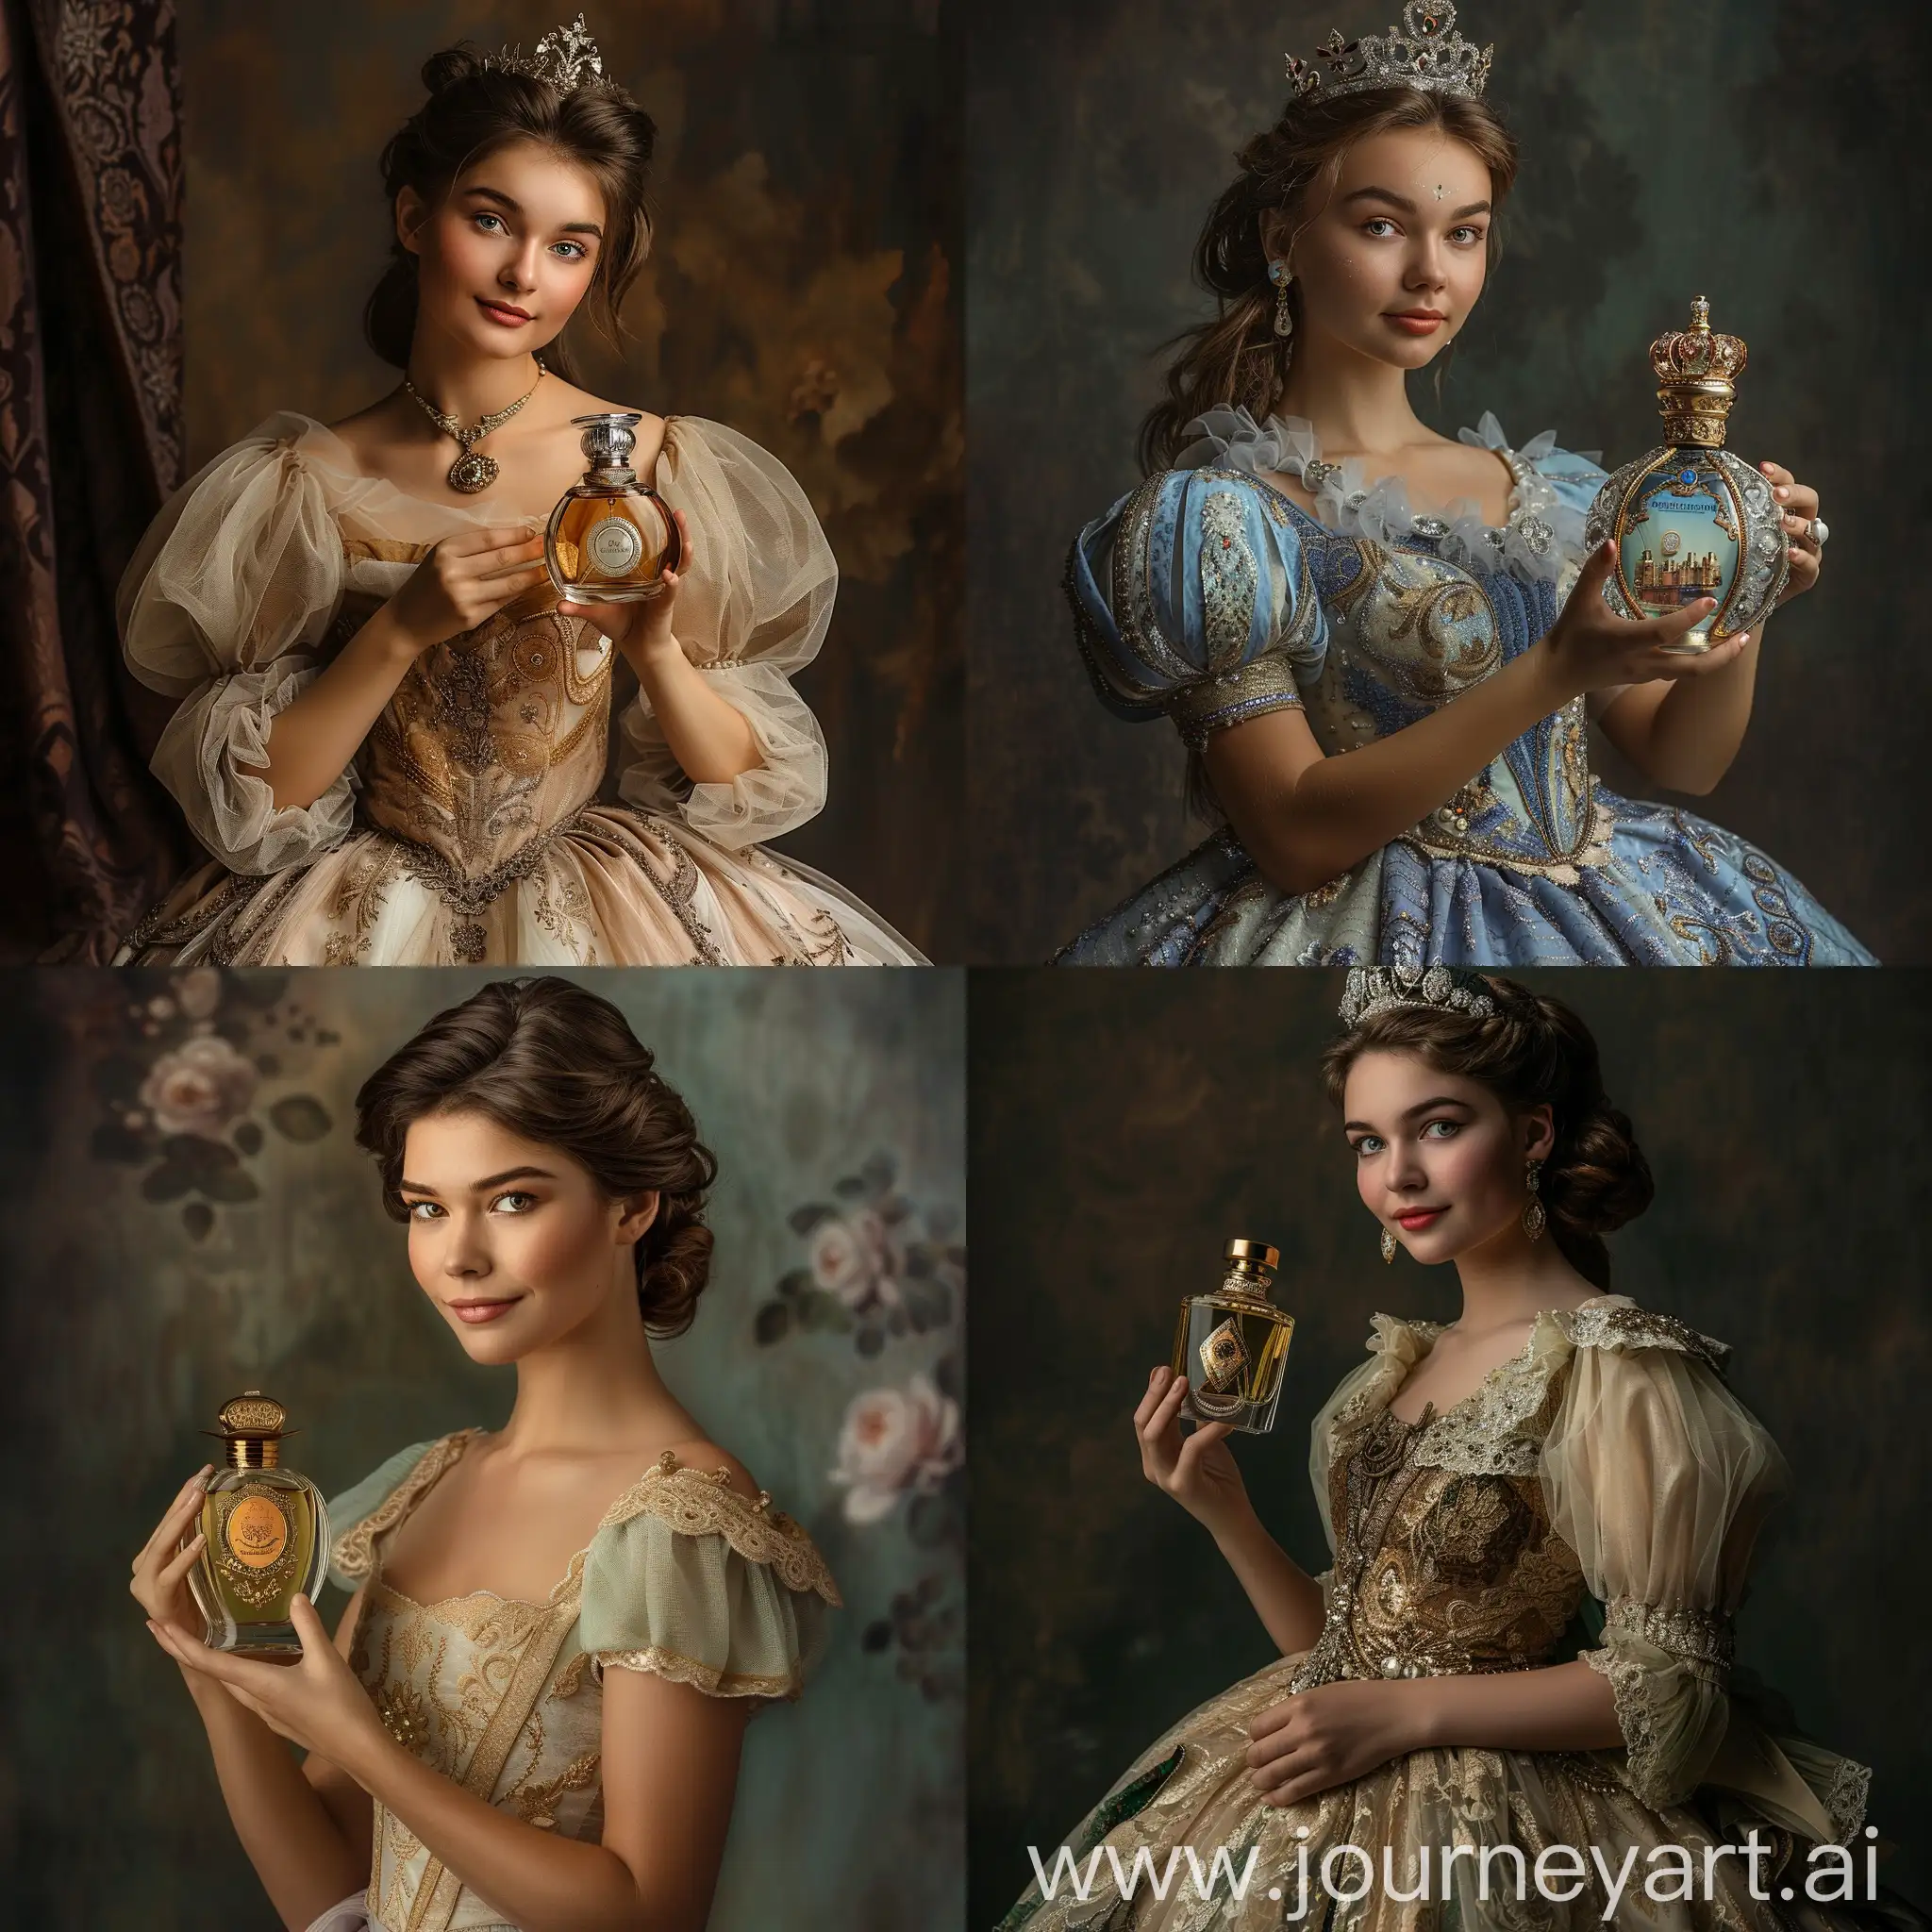 Elegant-Princess-Adorned-with-Perfume-Royal-Beauty-in-Studio-Portrait